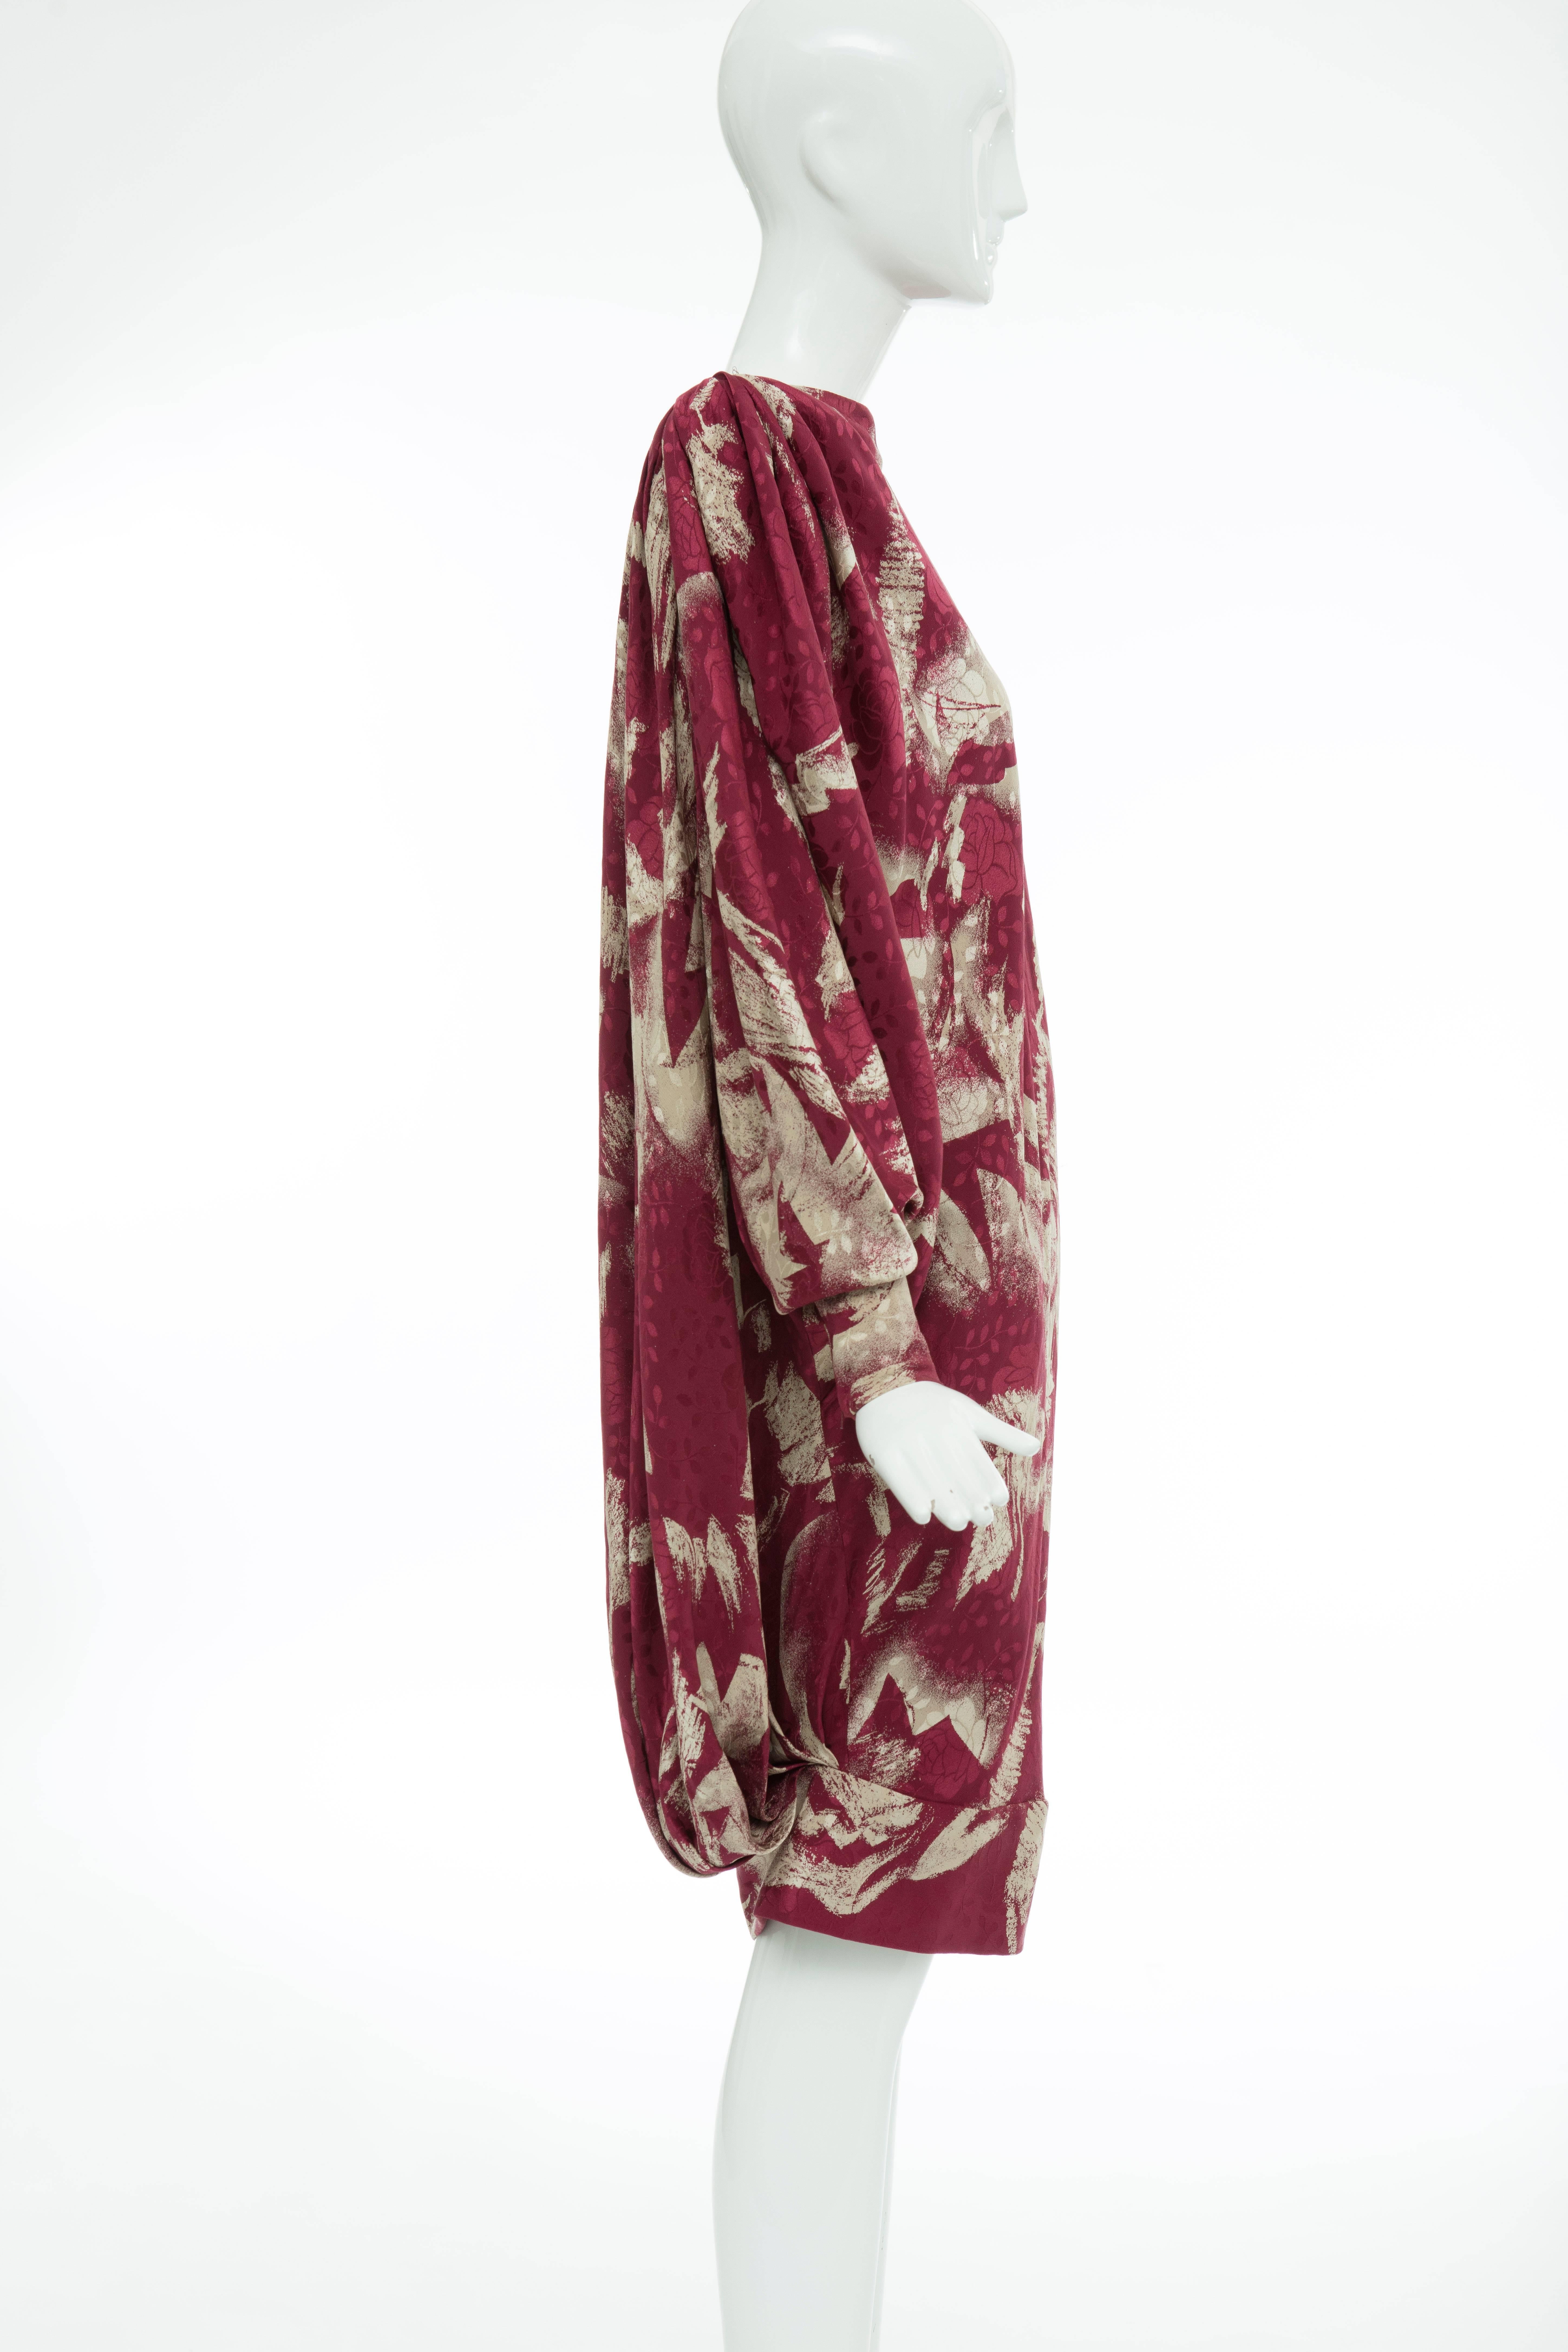 Brown Emanuel Ungaro Couture Paris Printed Silk Balloon Collection Dress, Circa 1980s For Sale